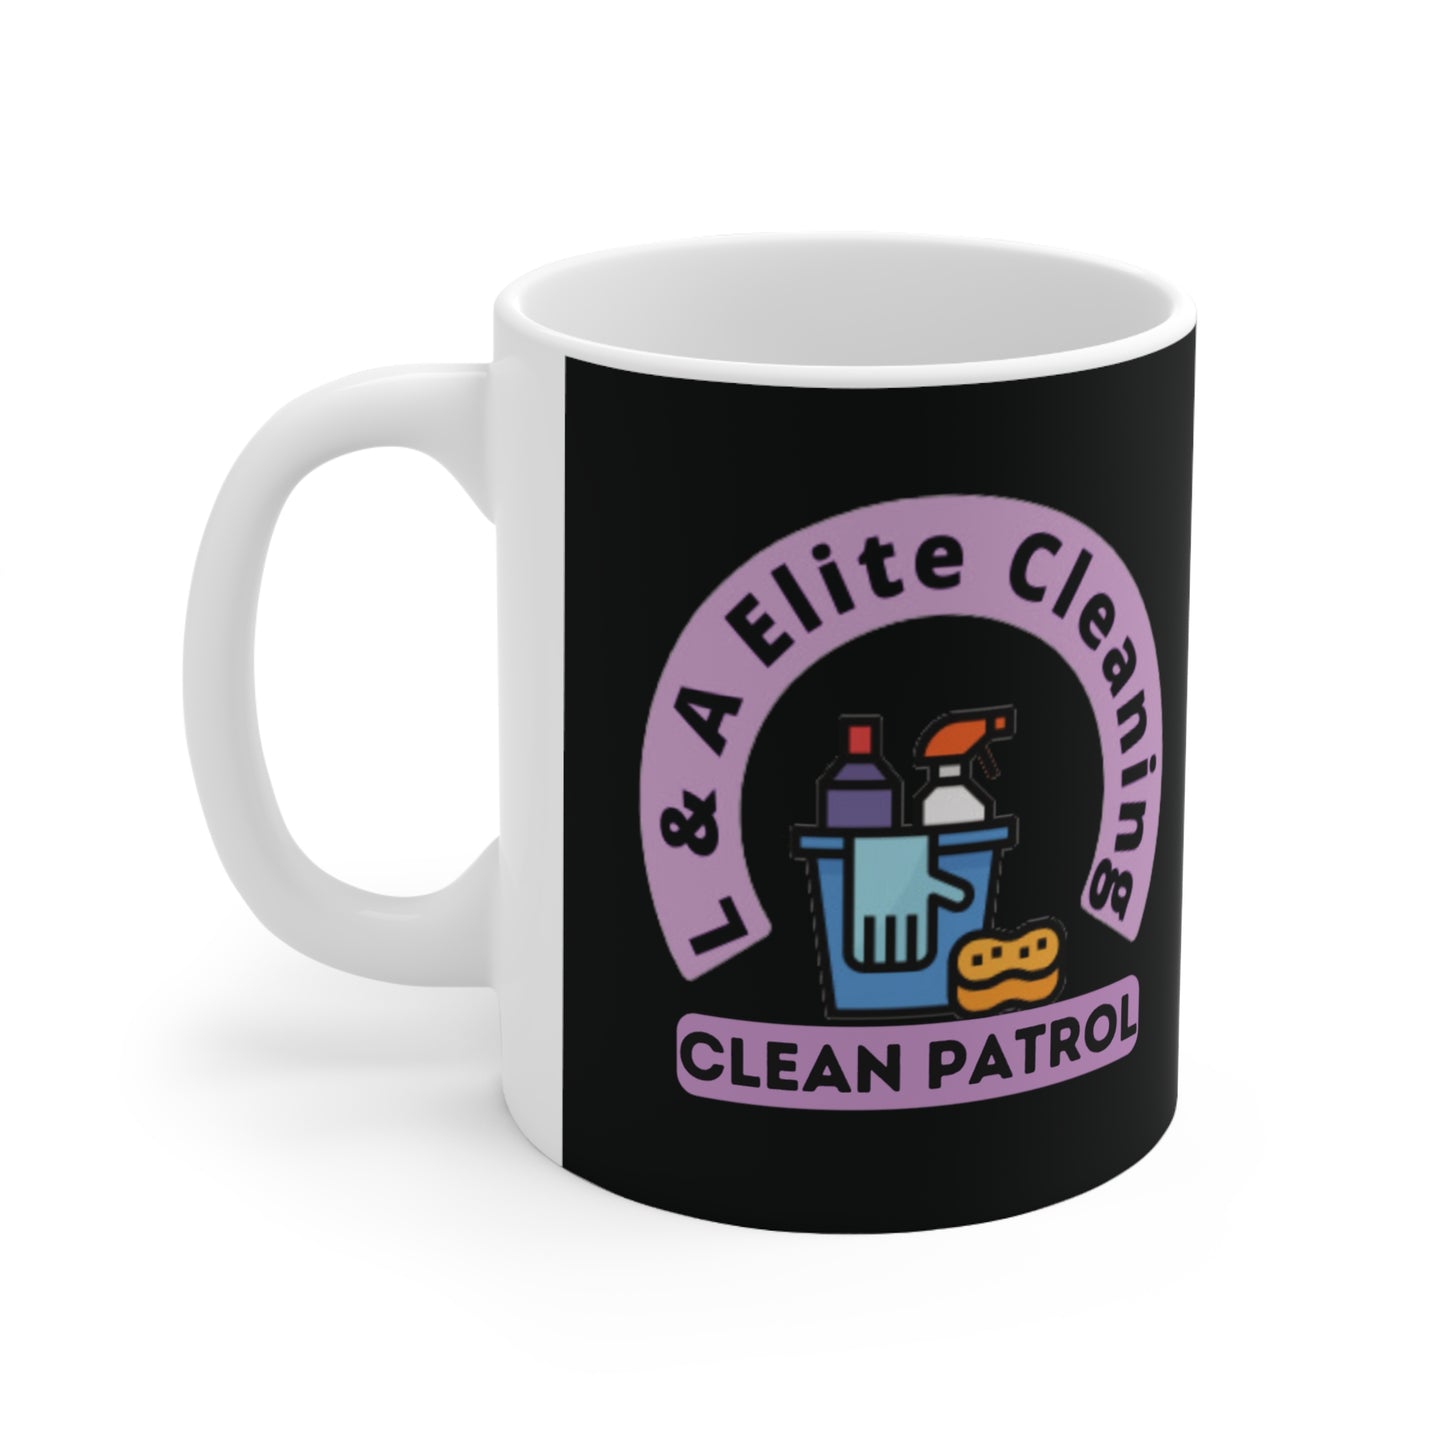 Clean Patrol Cups